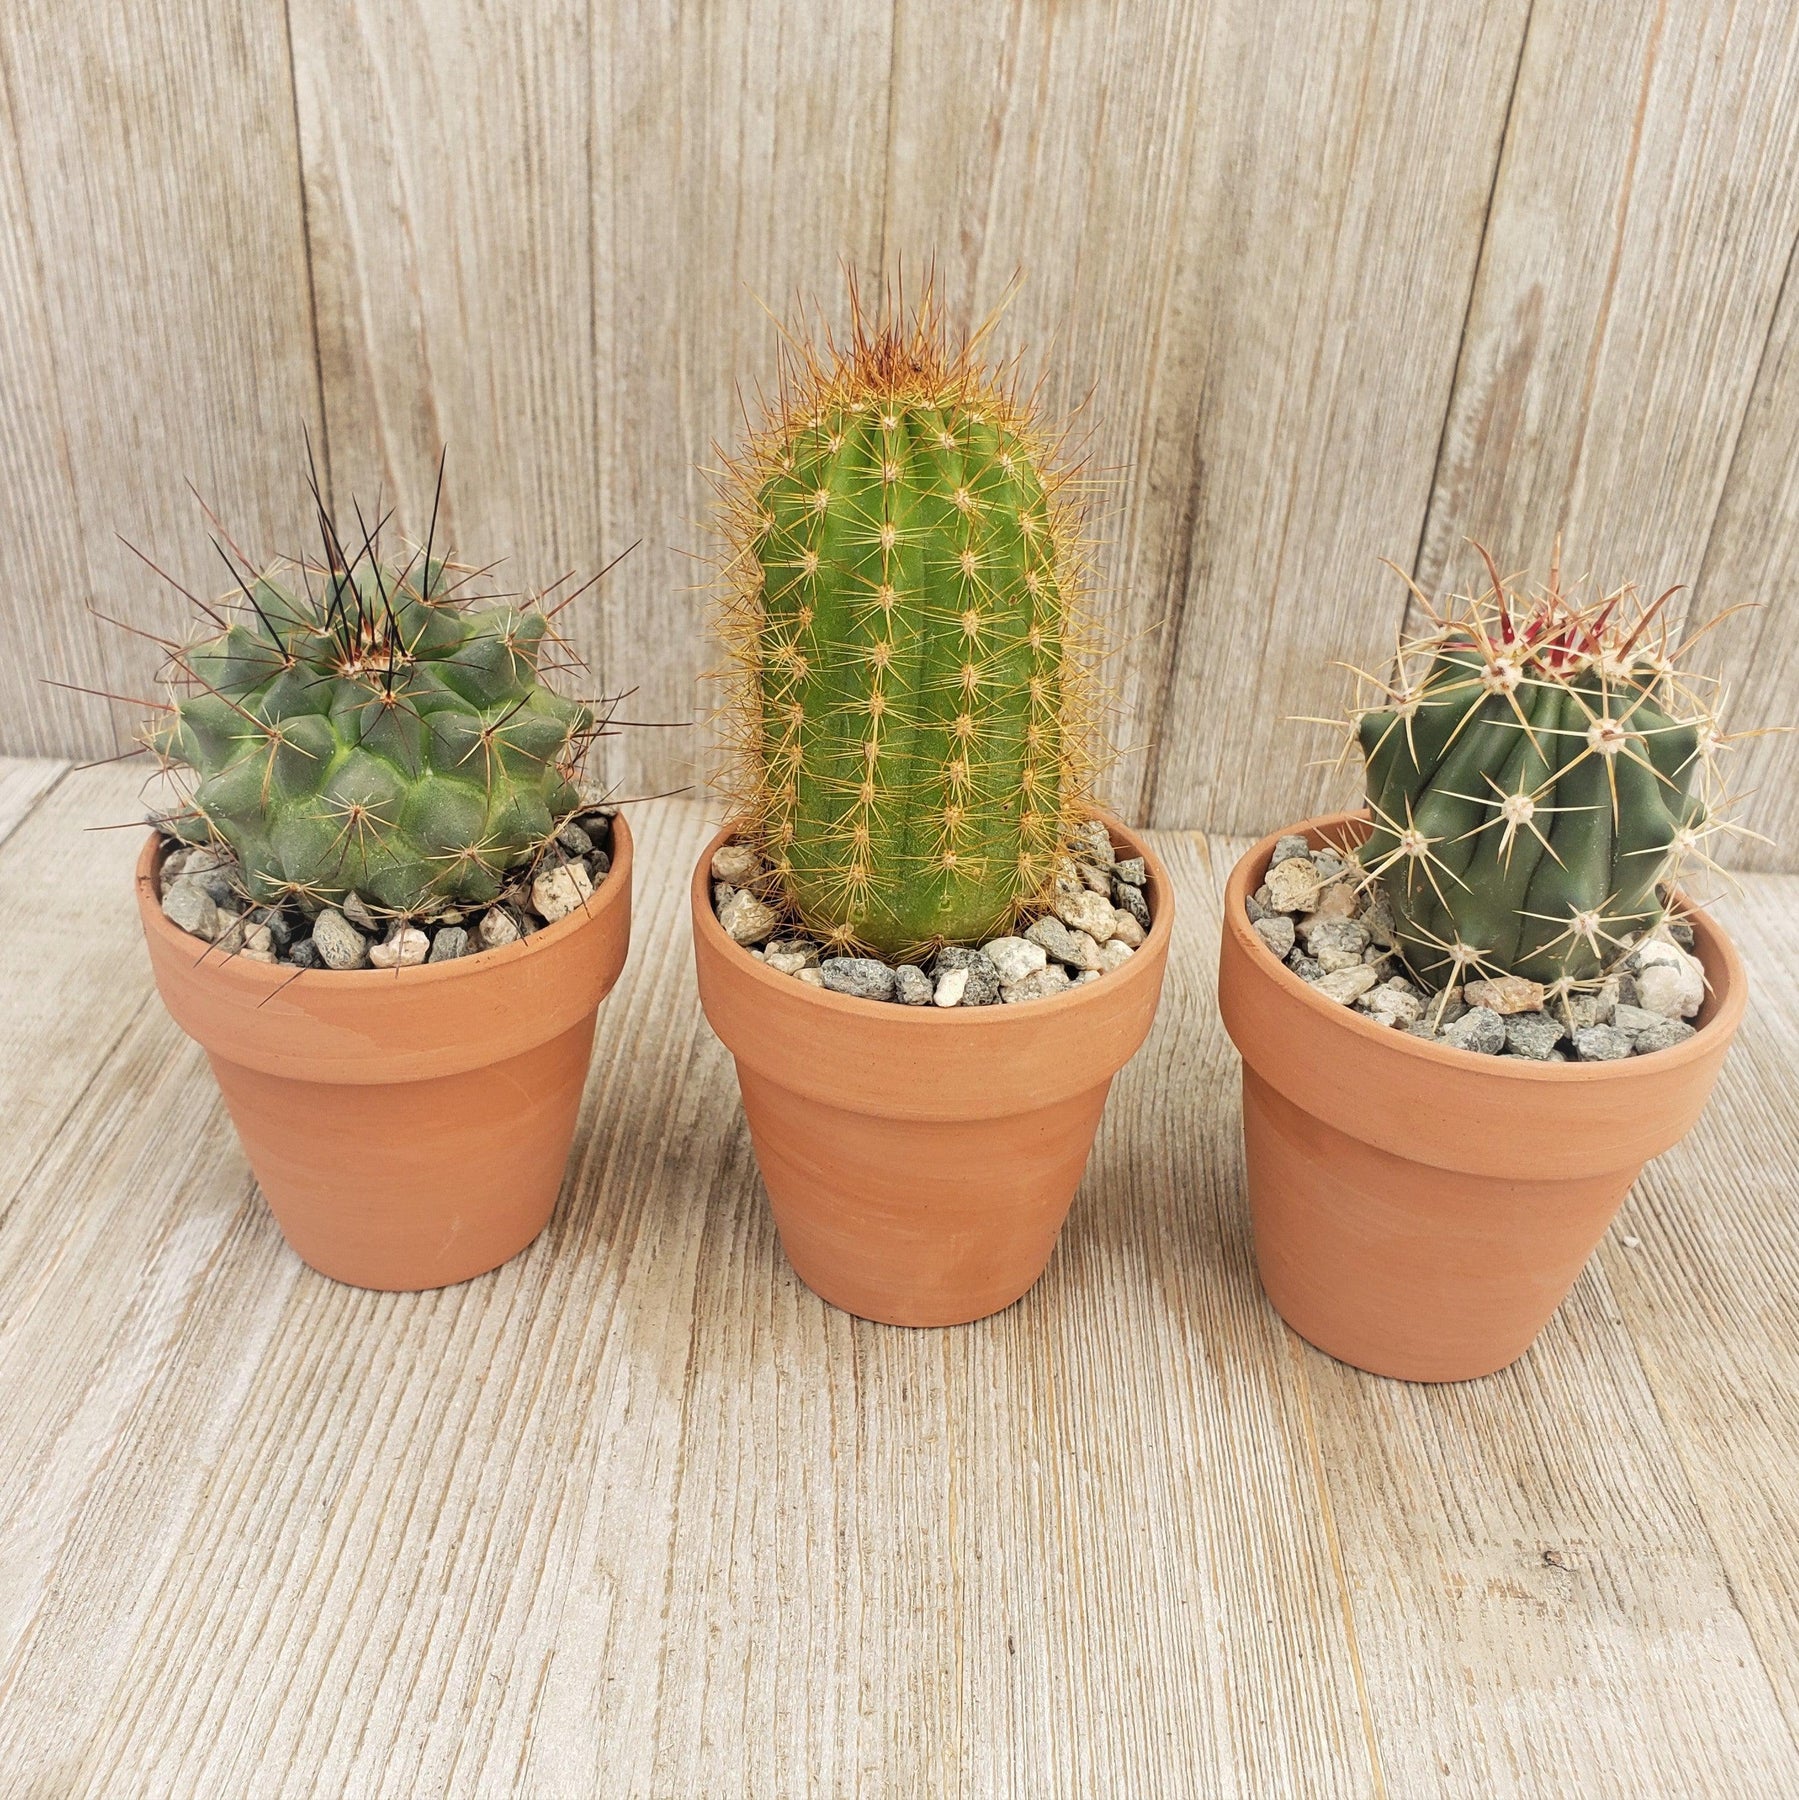 Planet Desert Cactus And Succulent Plants For Sale